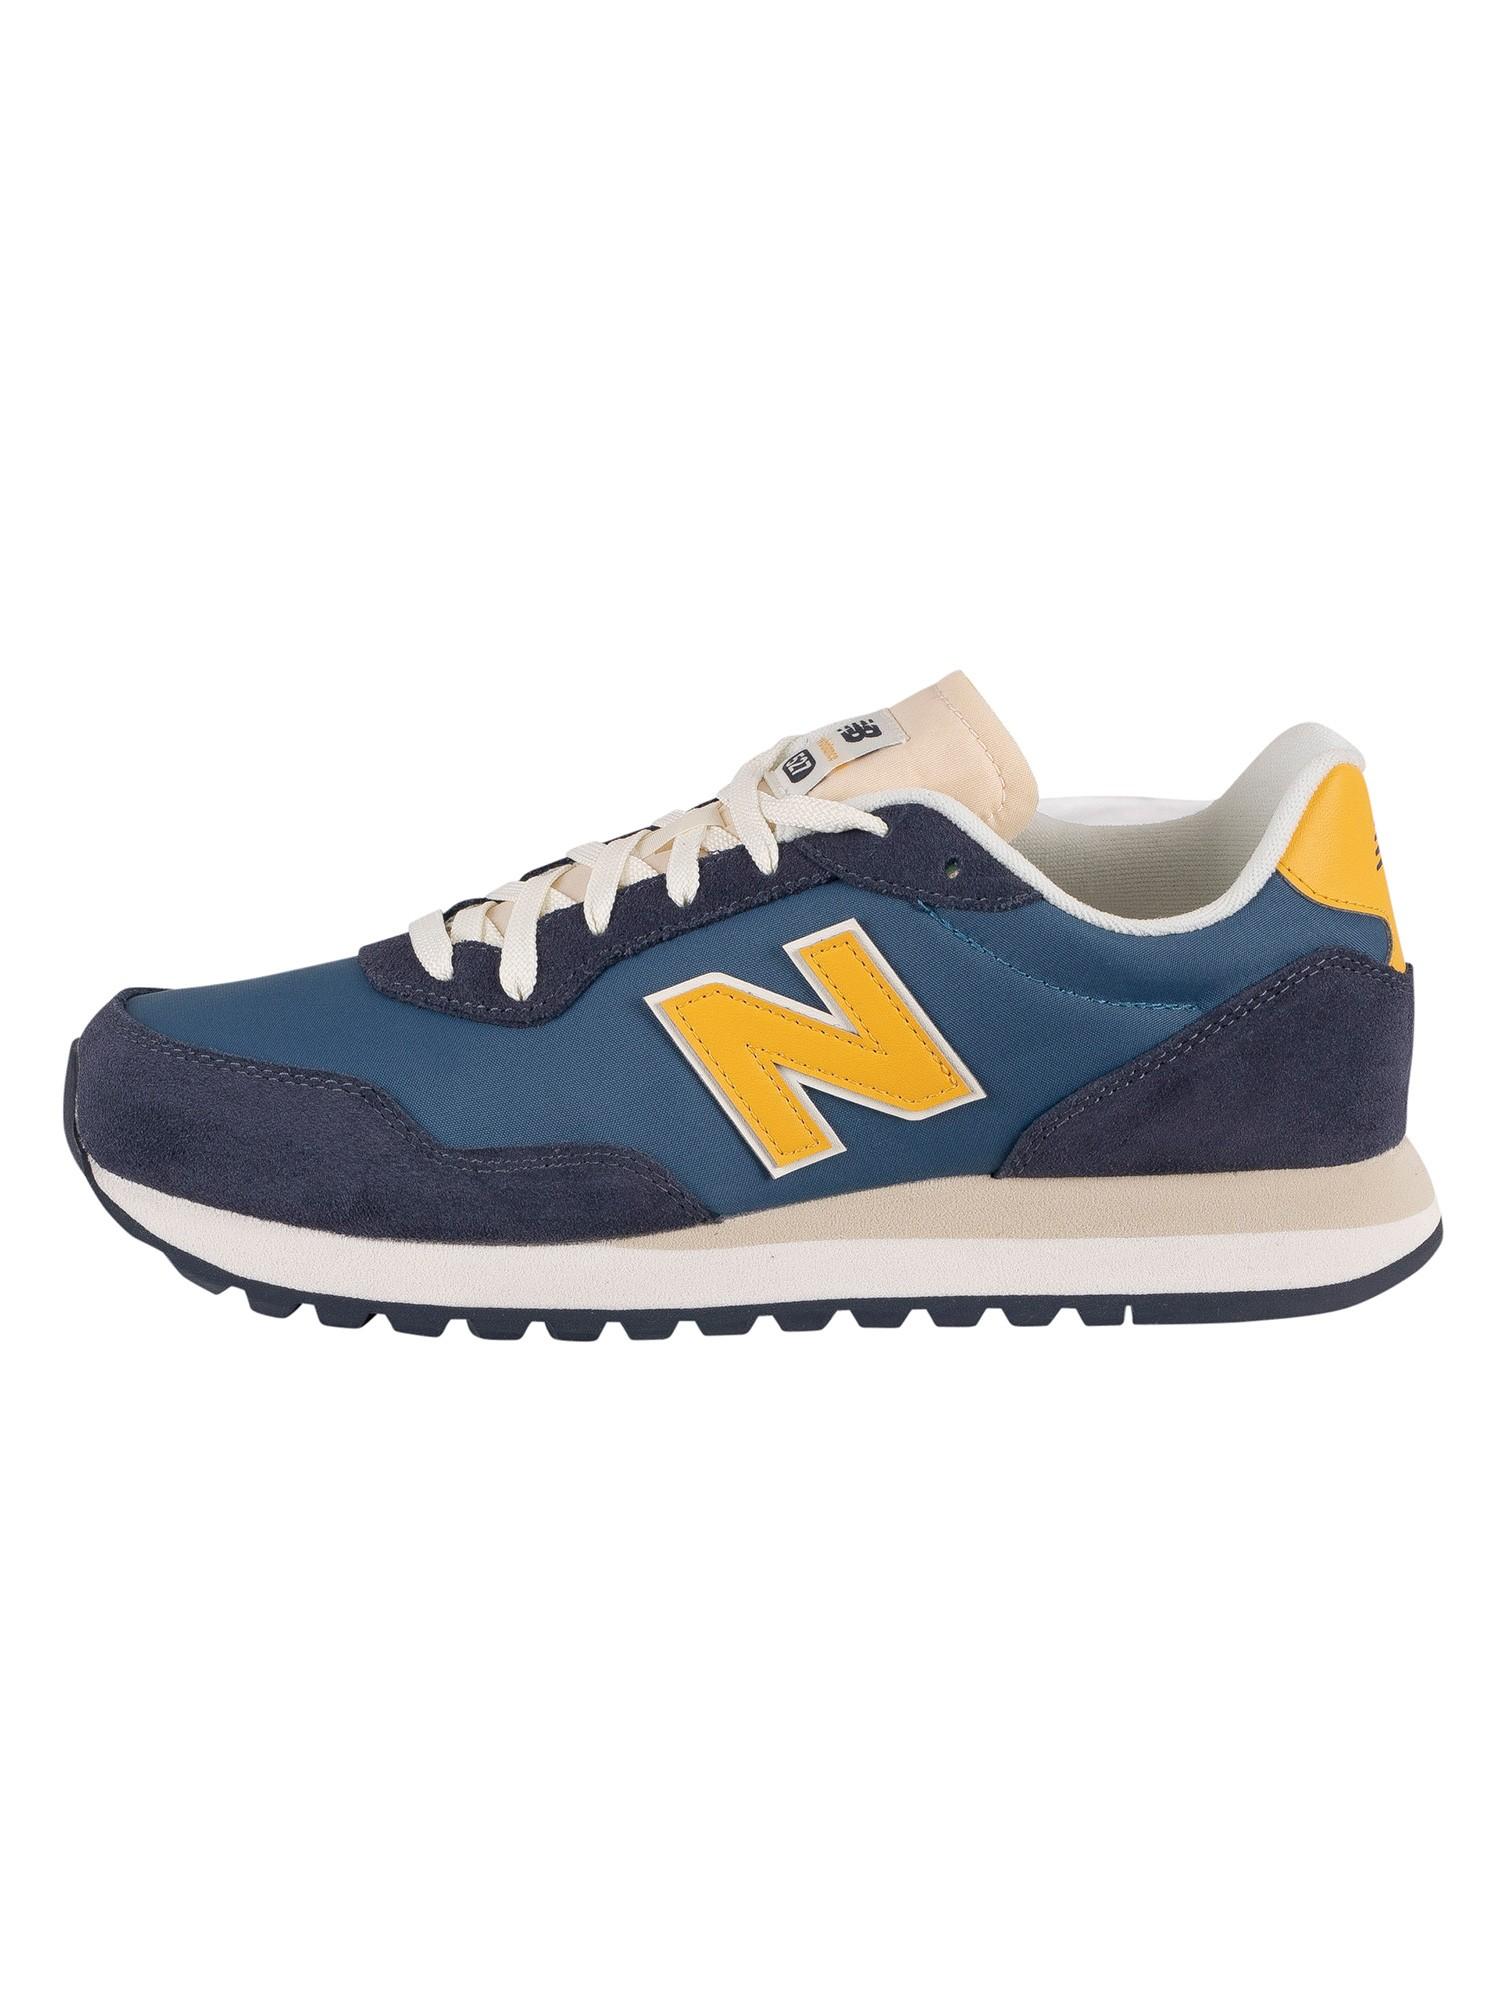 New Balance Suede 527 Trainers in Natural Indigo/Cobalt Blue (Blue 